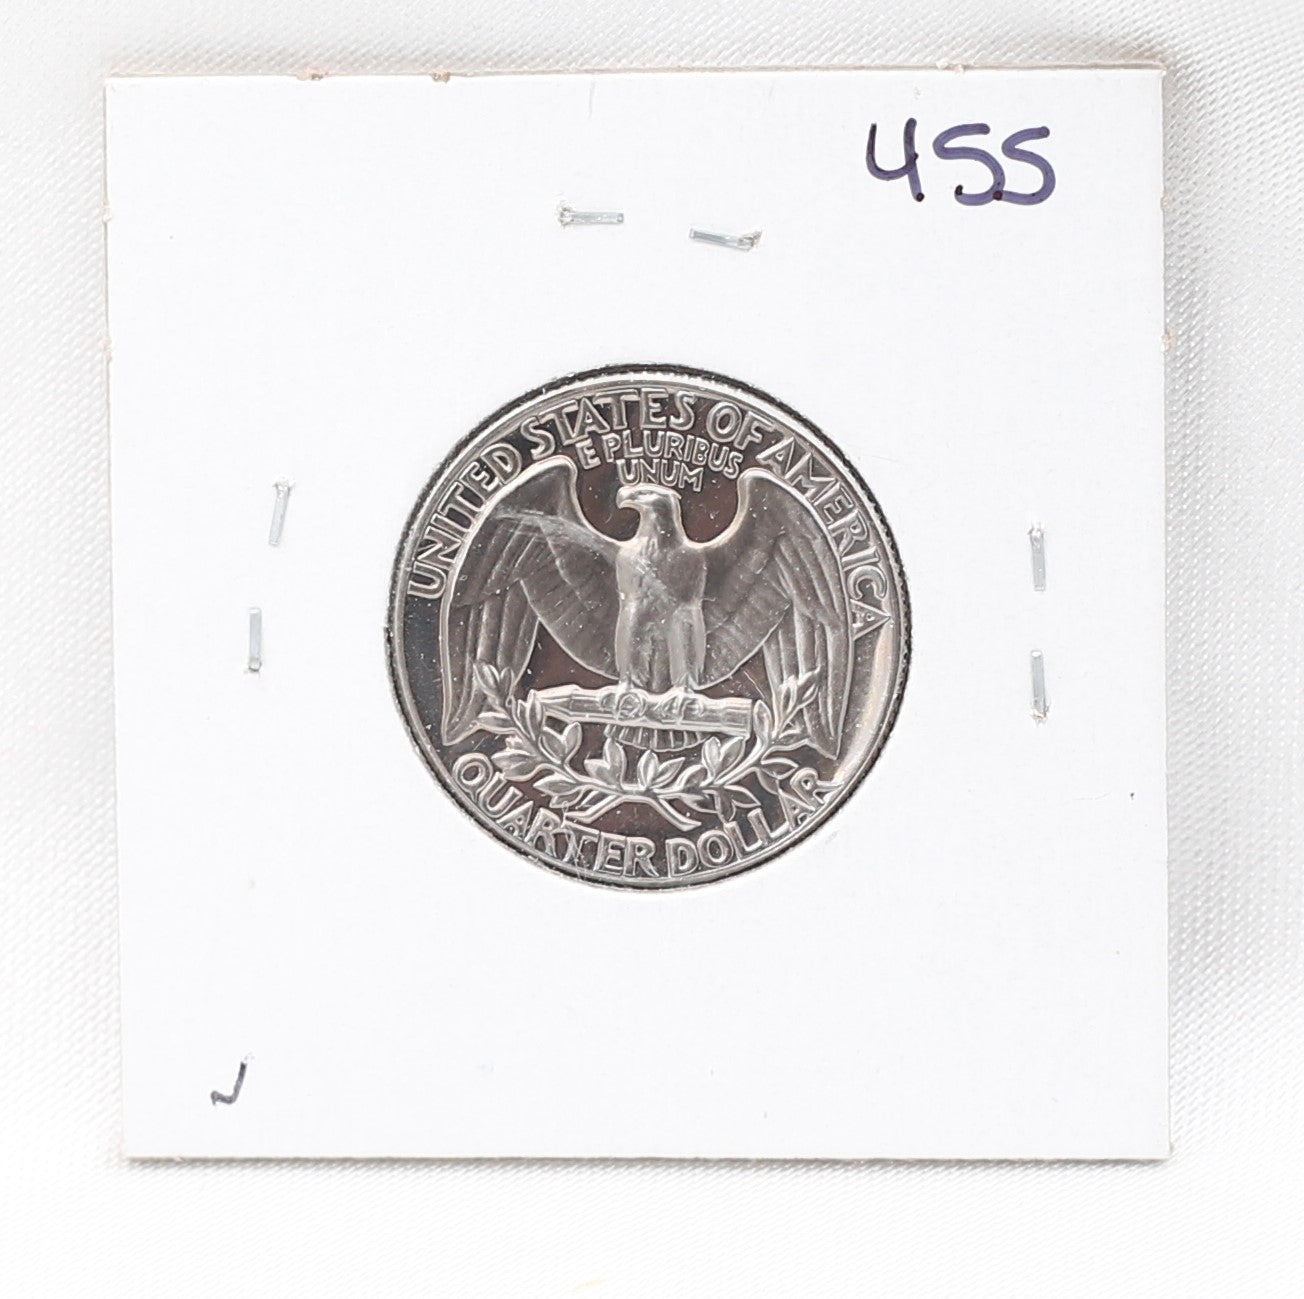 1970-S Proof Silver Quarter